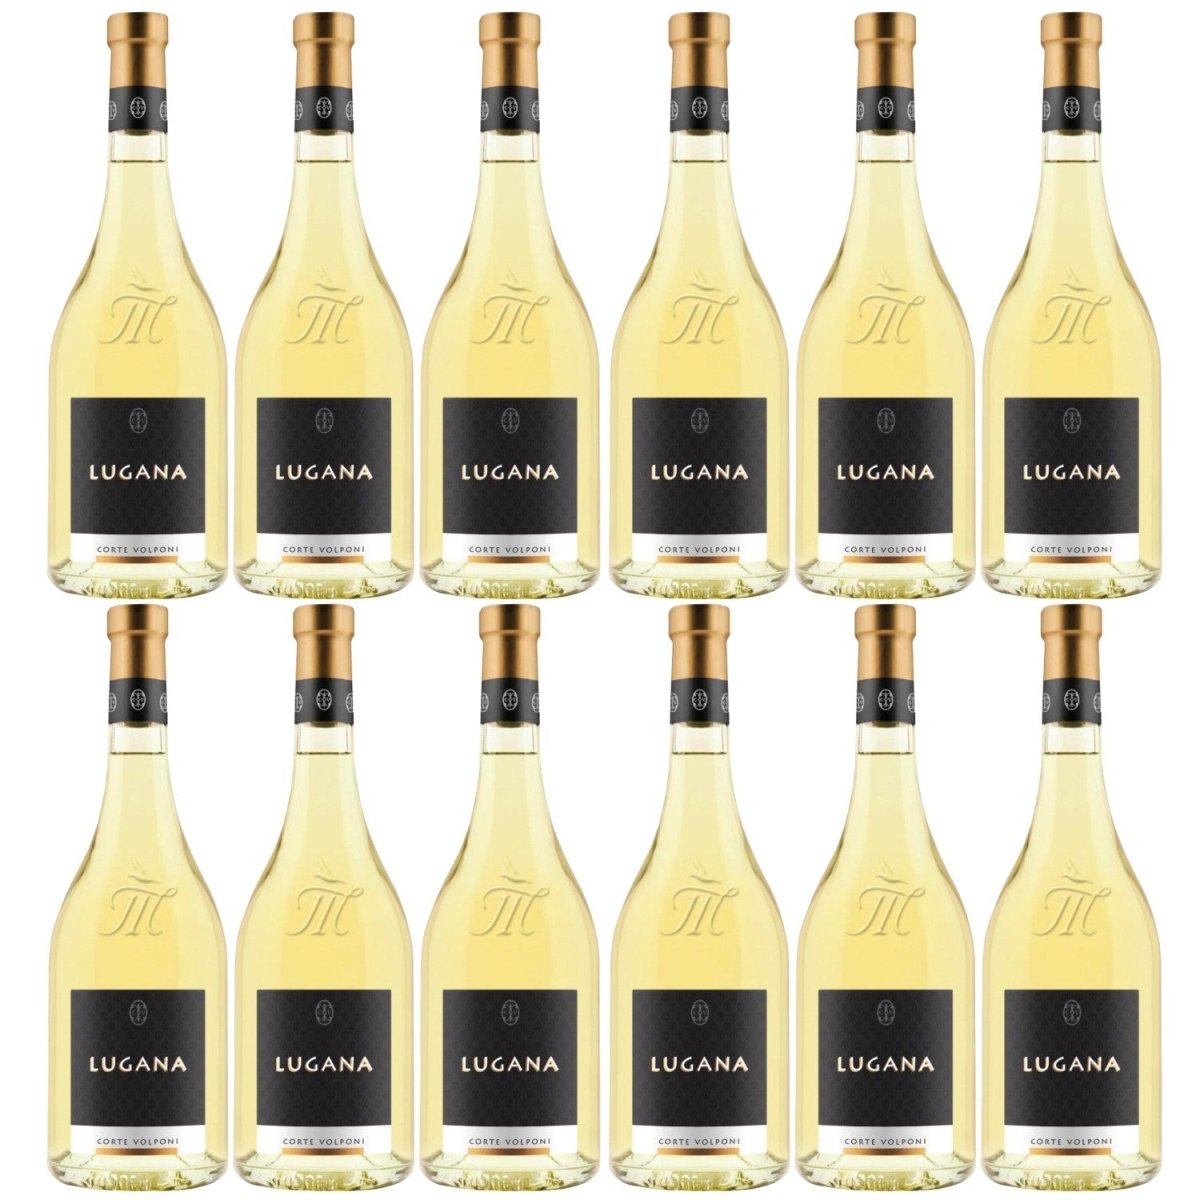 Le Morette Corte Volponi Lugana DOC Weißwein Wein trocken Italien (12 x 0,75l) - Versanel -